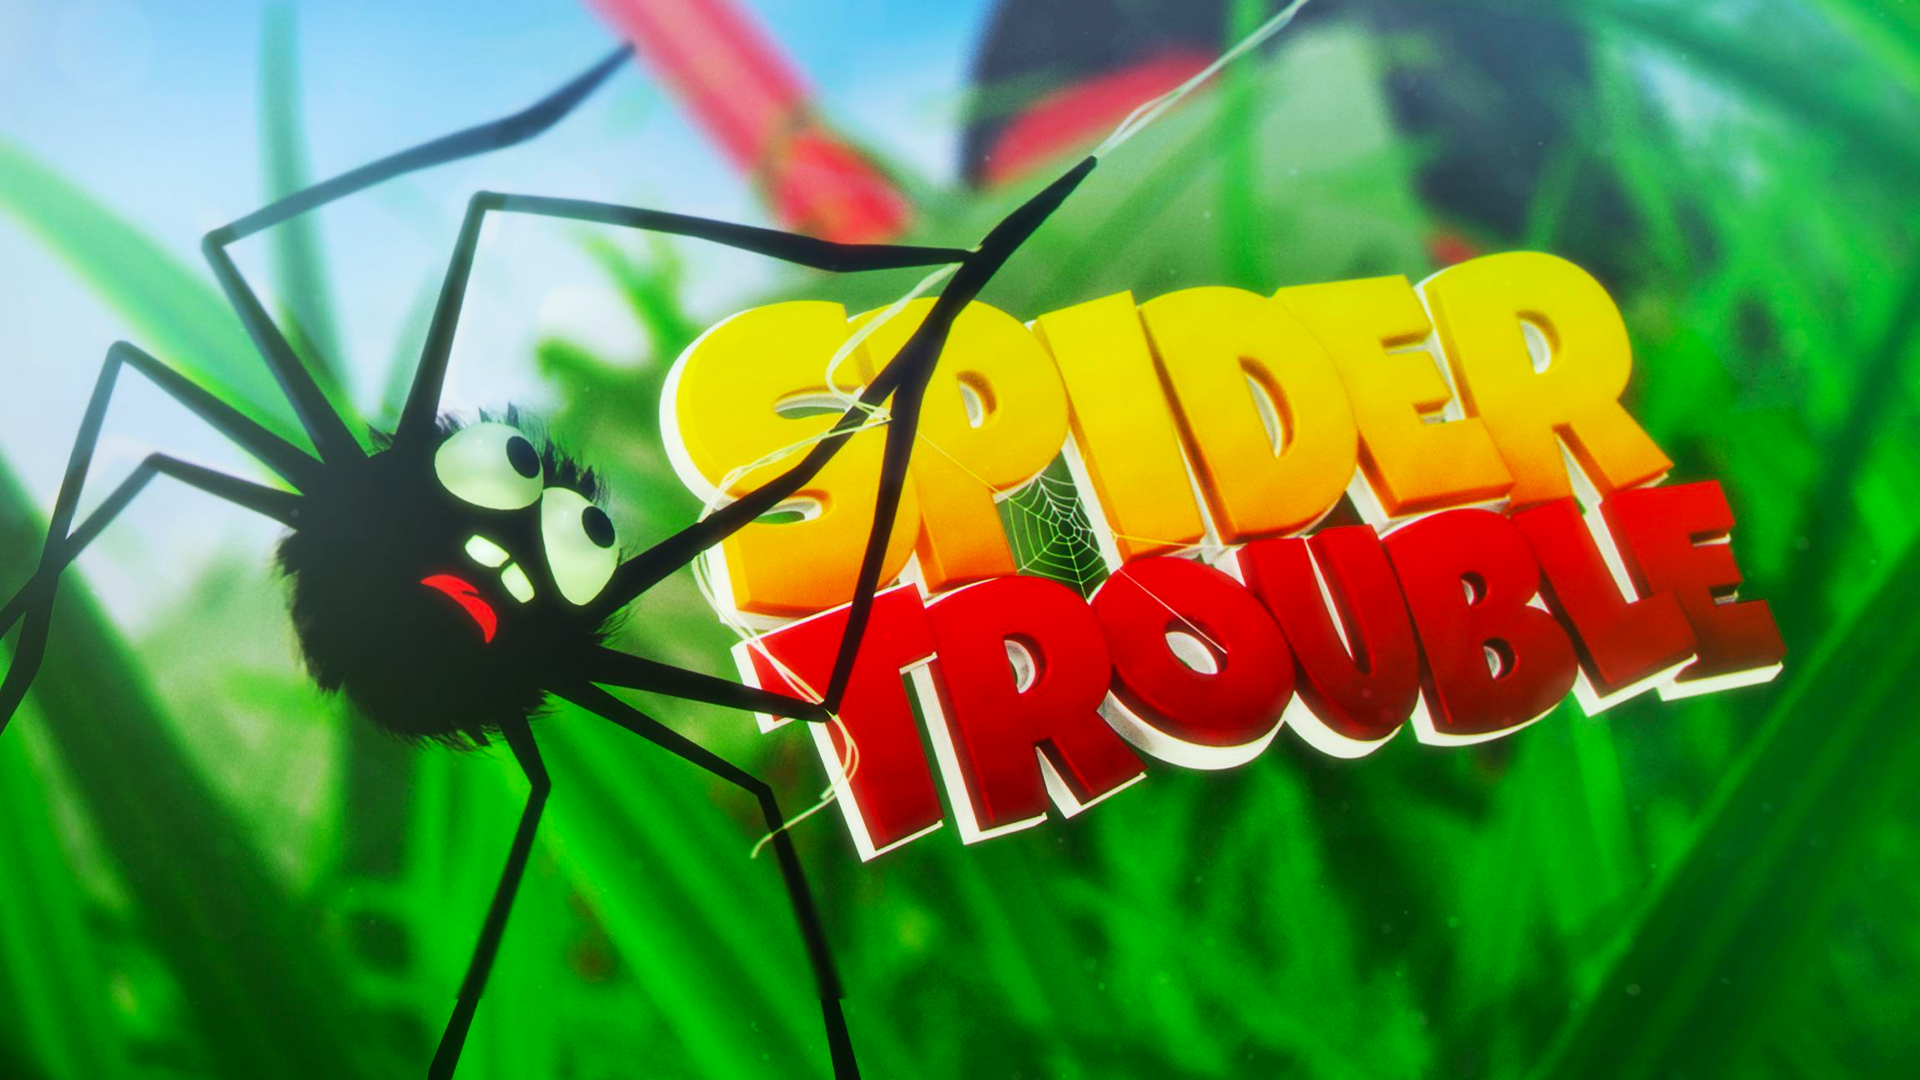 Spider Trouble游戏截图